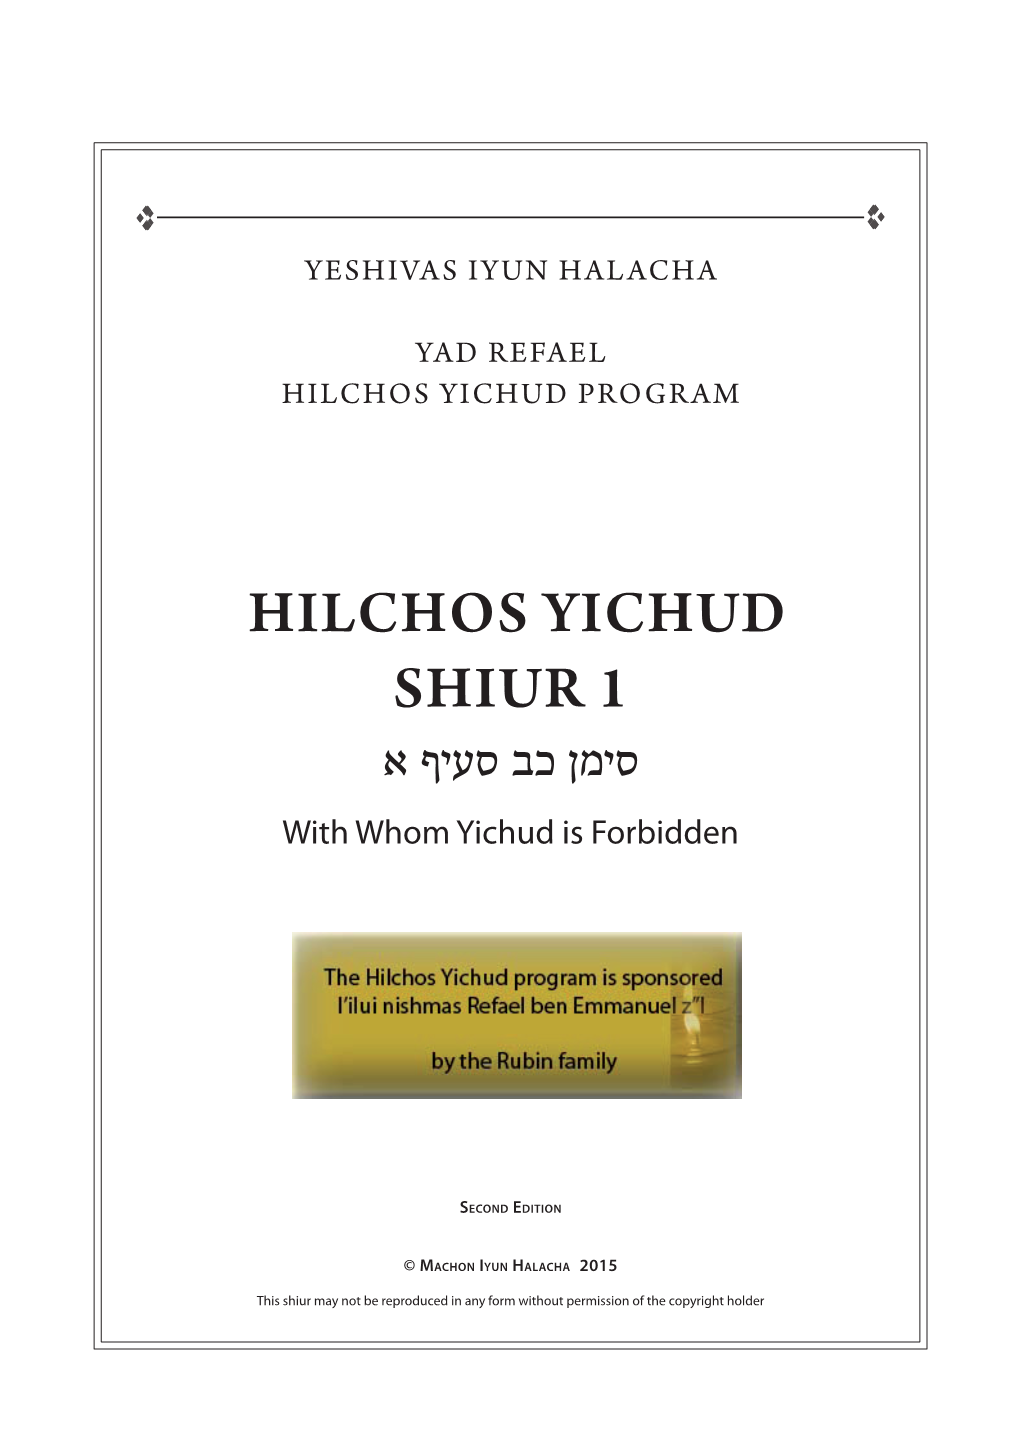 Hilchos Yichud Program